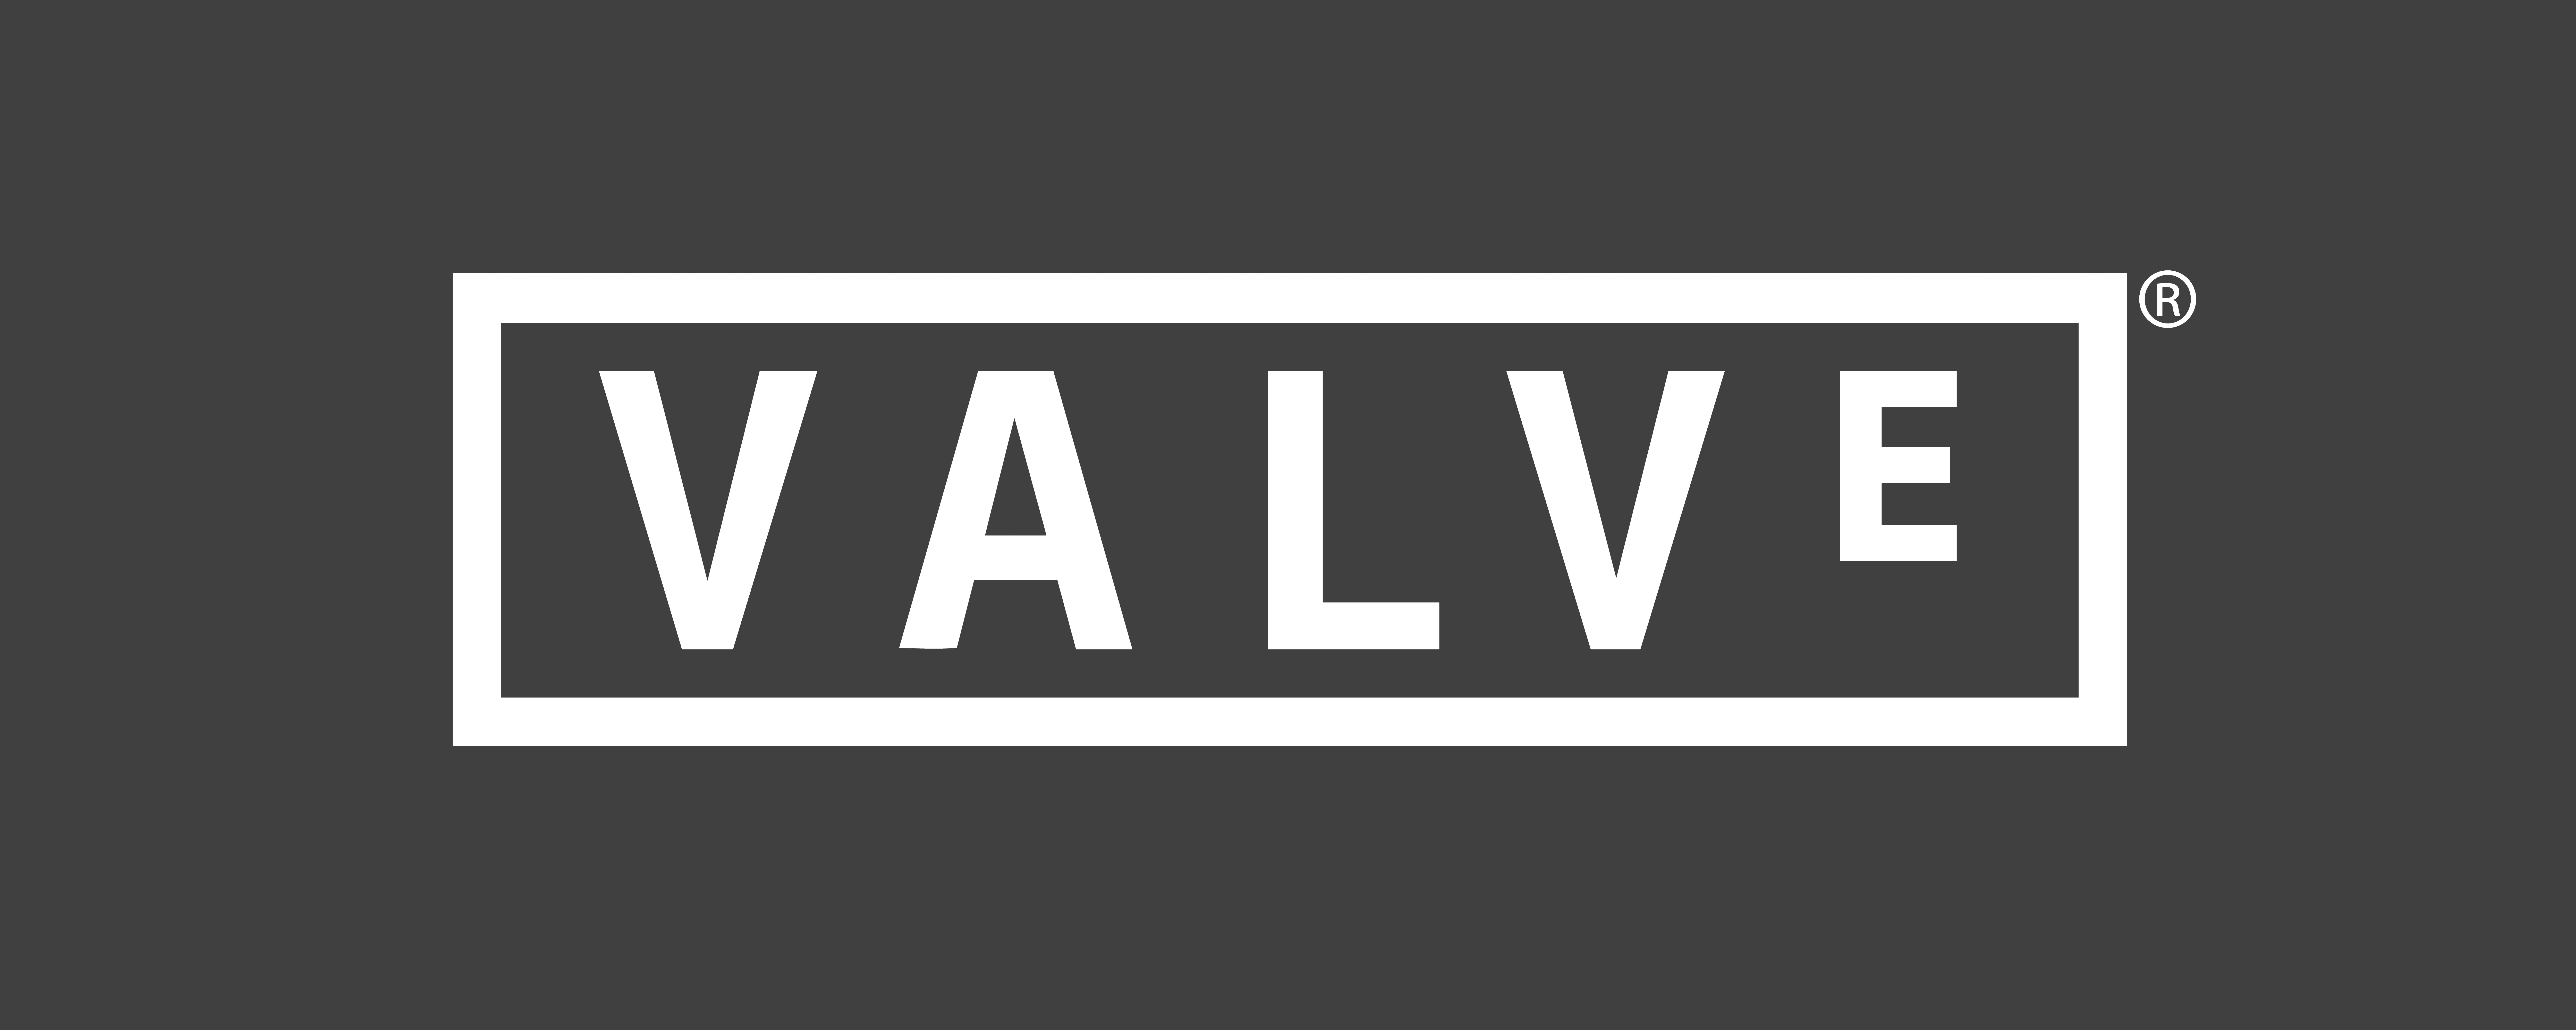 Valve Wallpaper